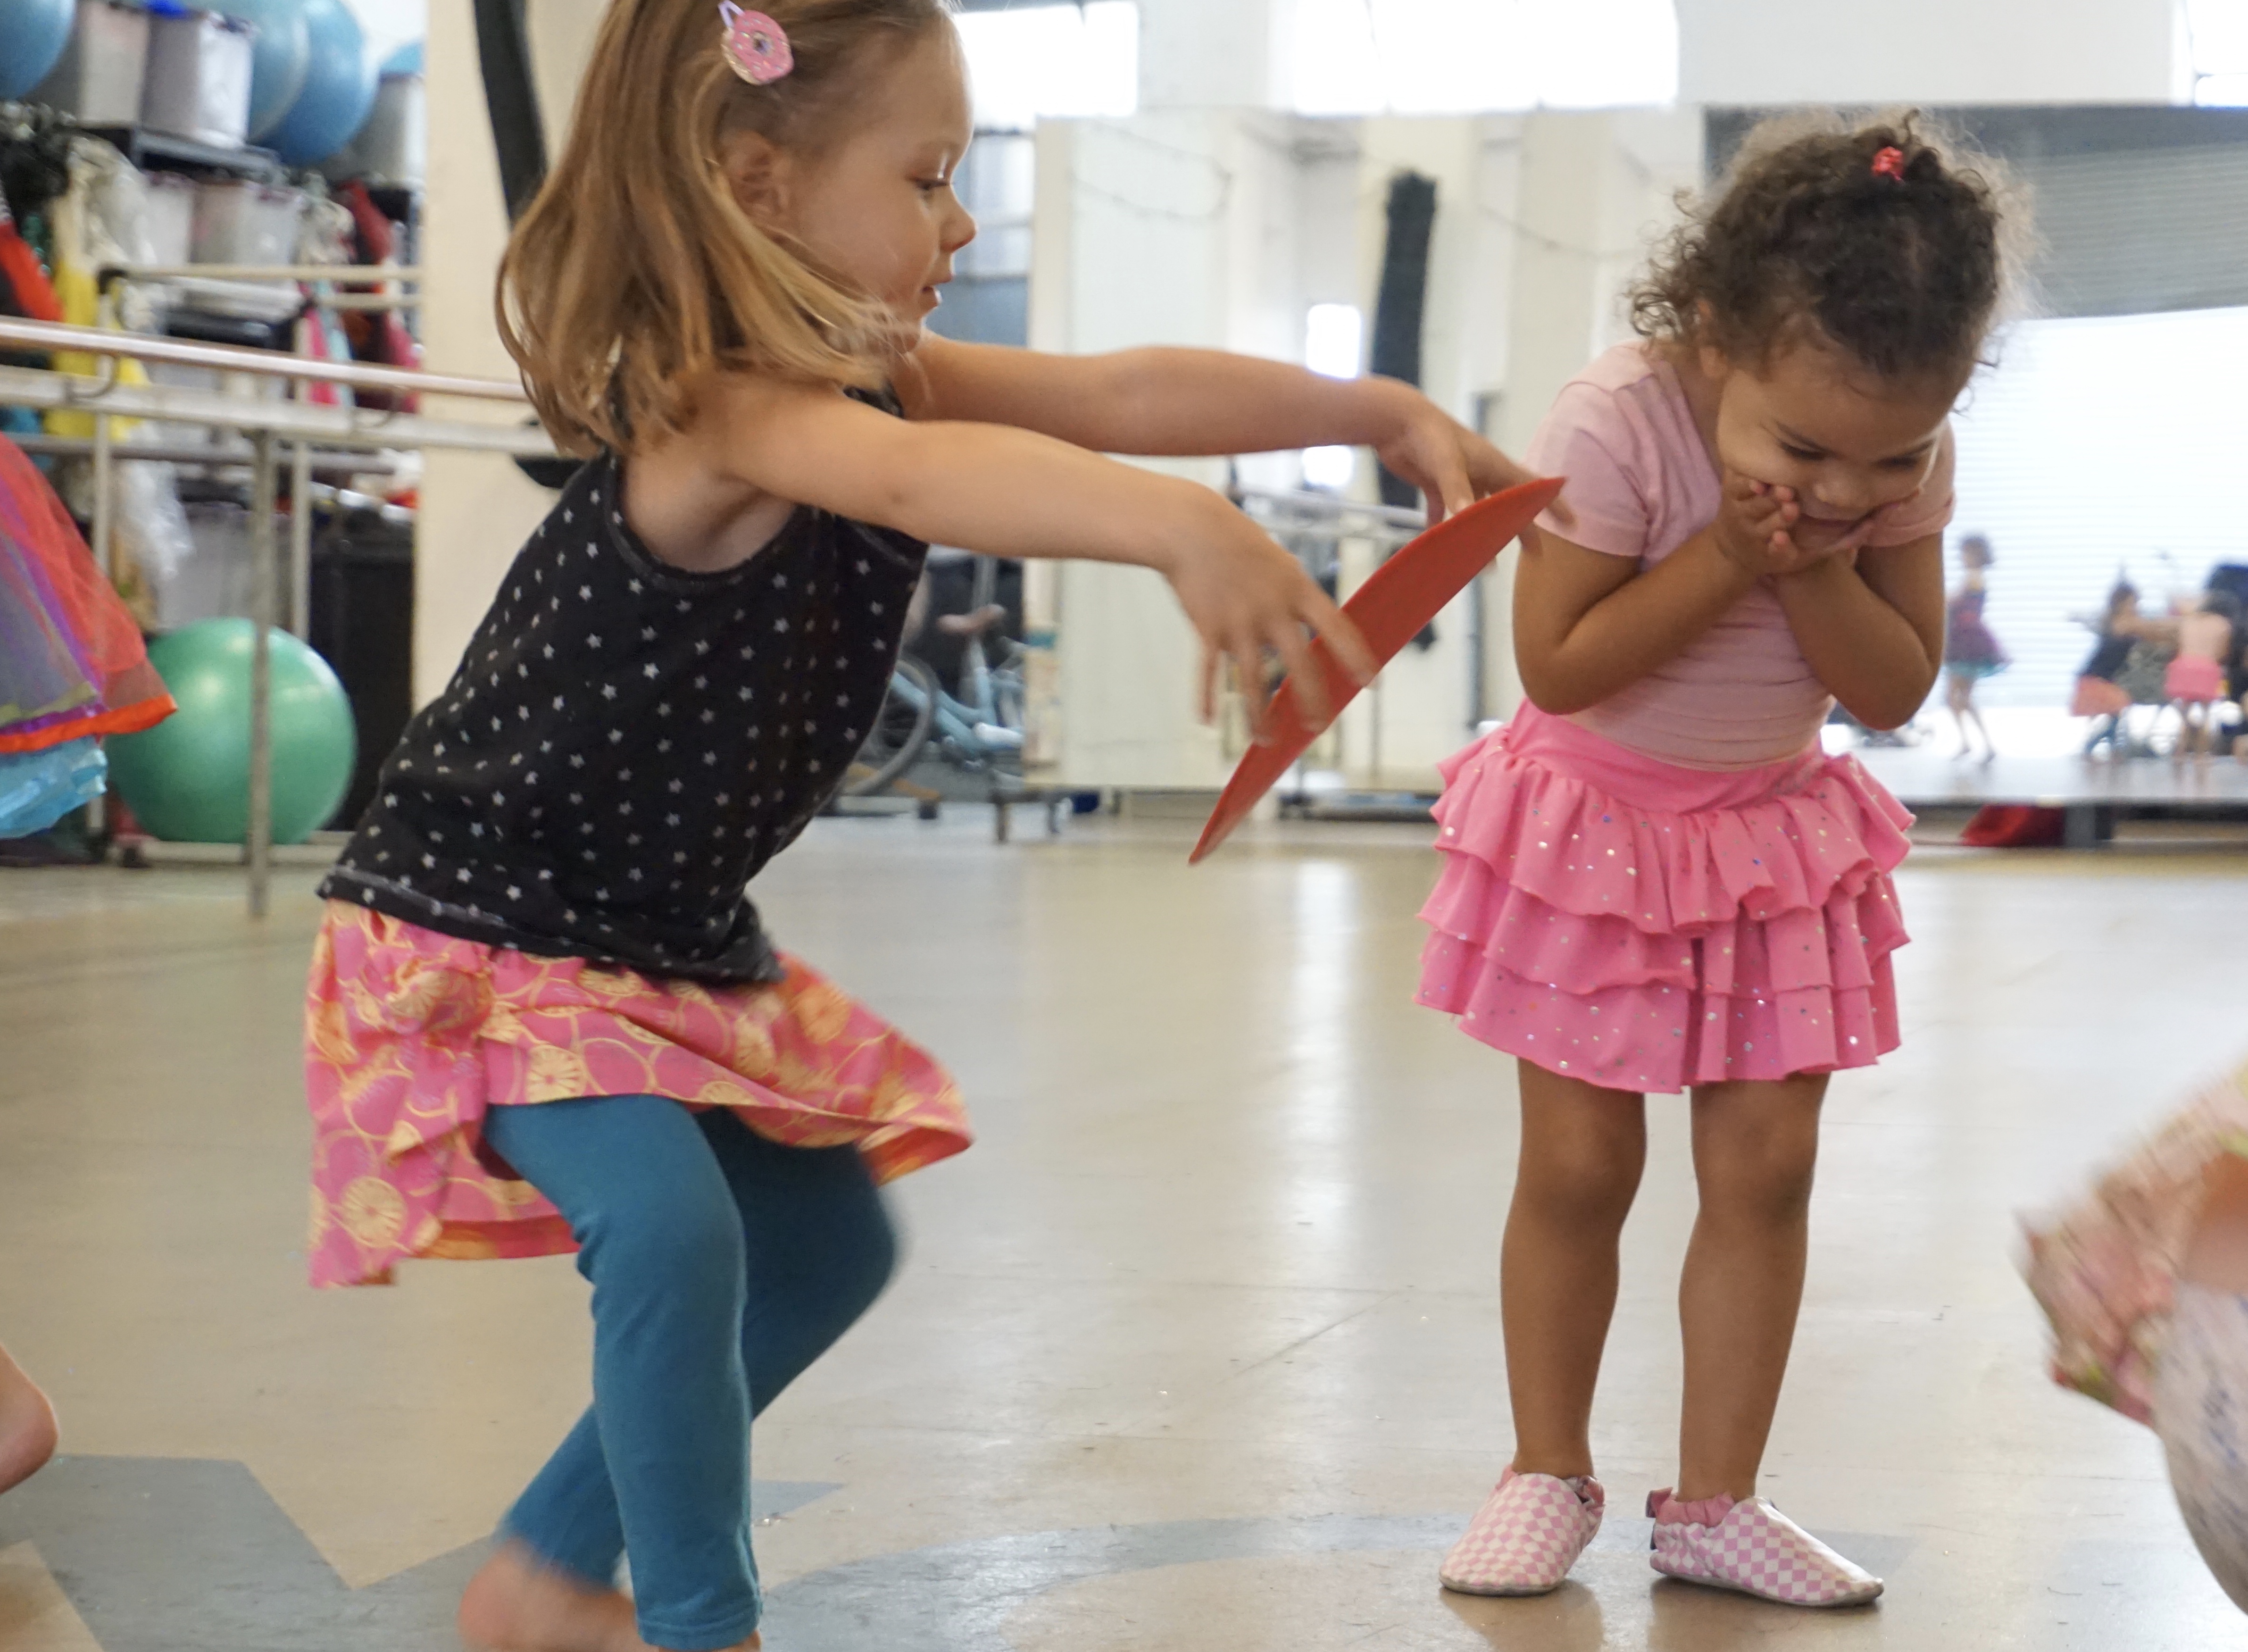 Preschool Dance Classes